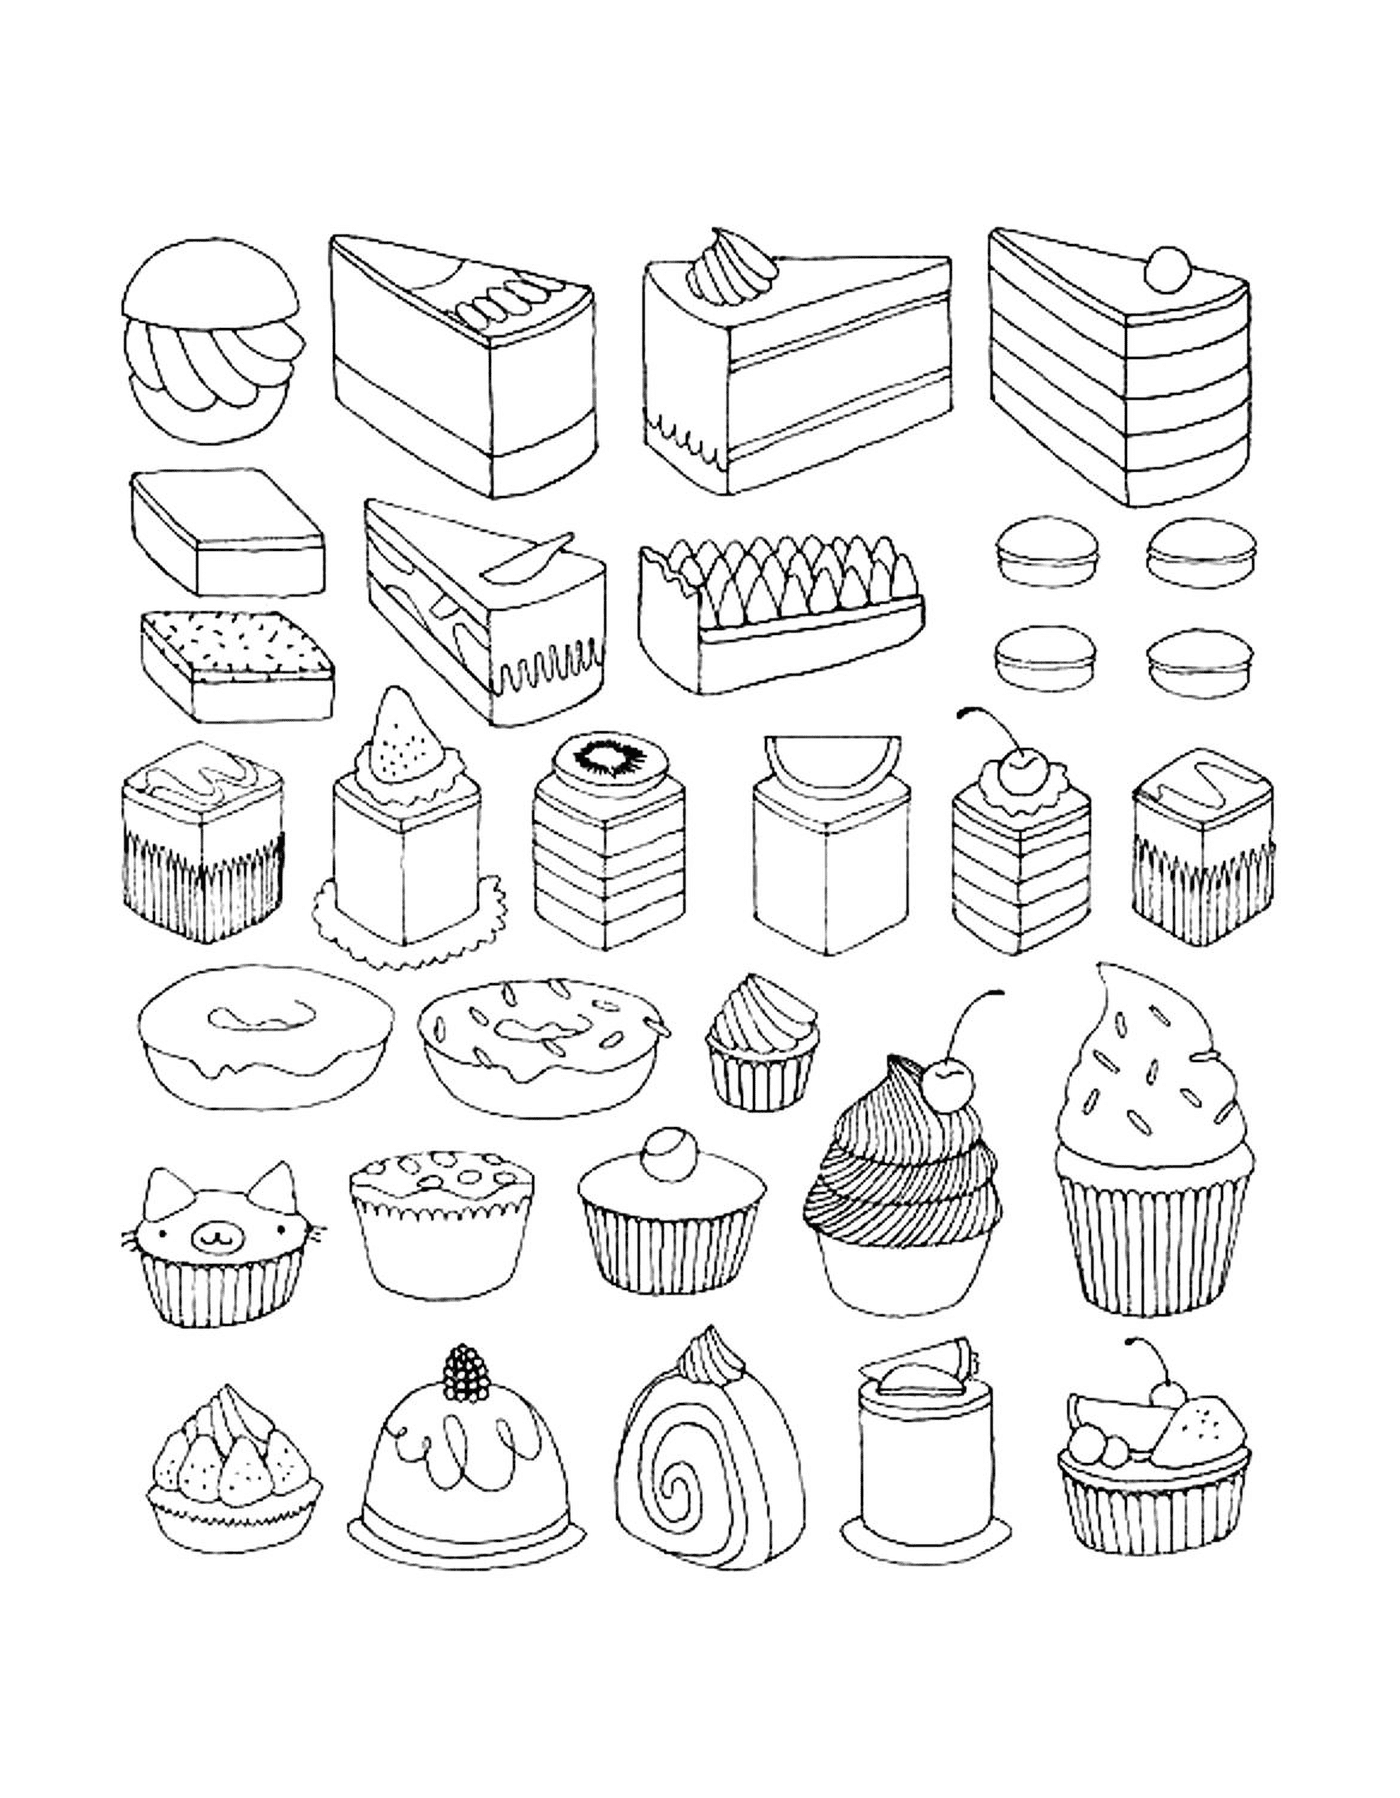  Cupcakes e bolos para adultos, variados e apetitosos 